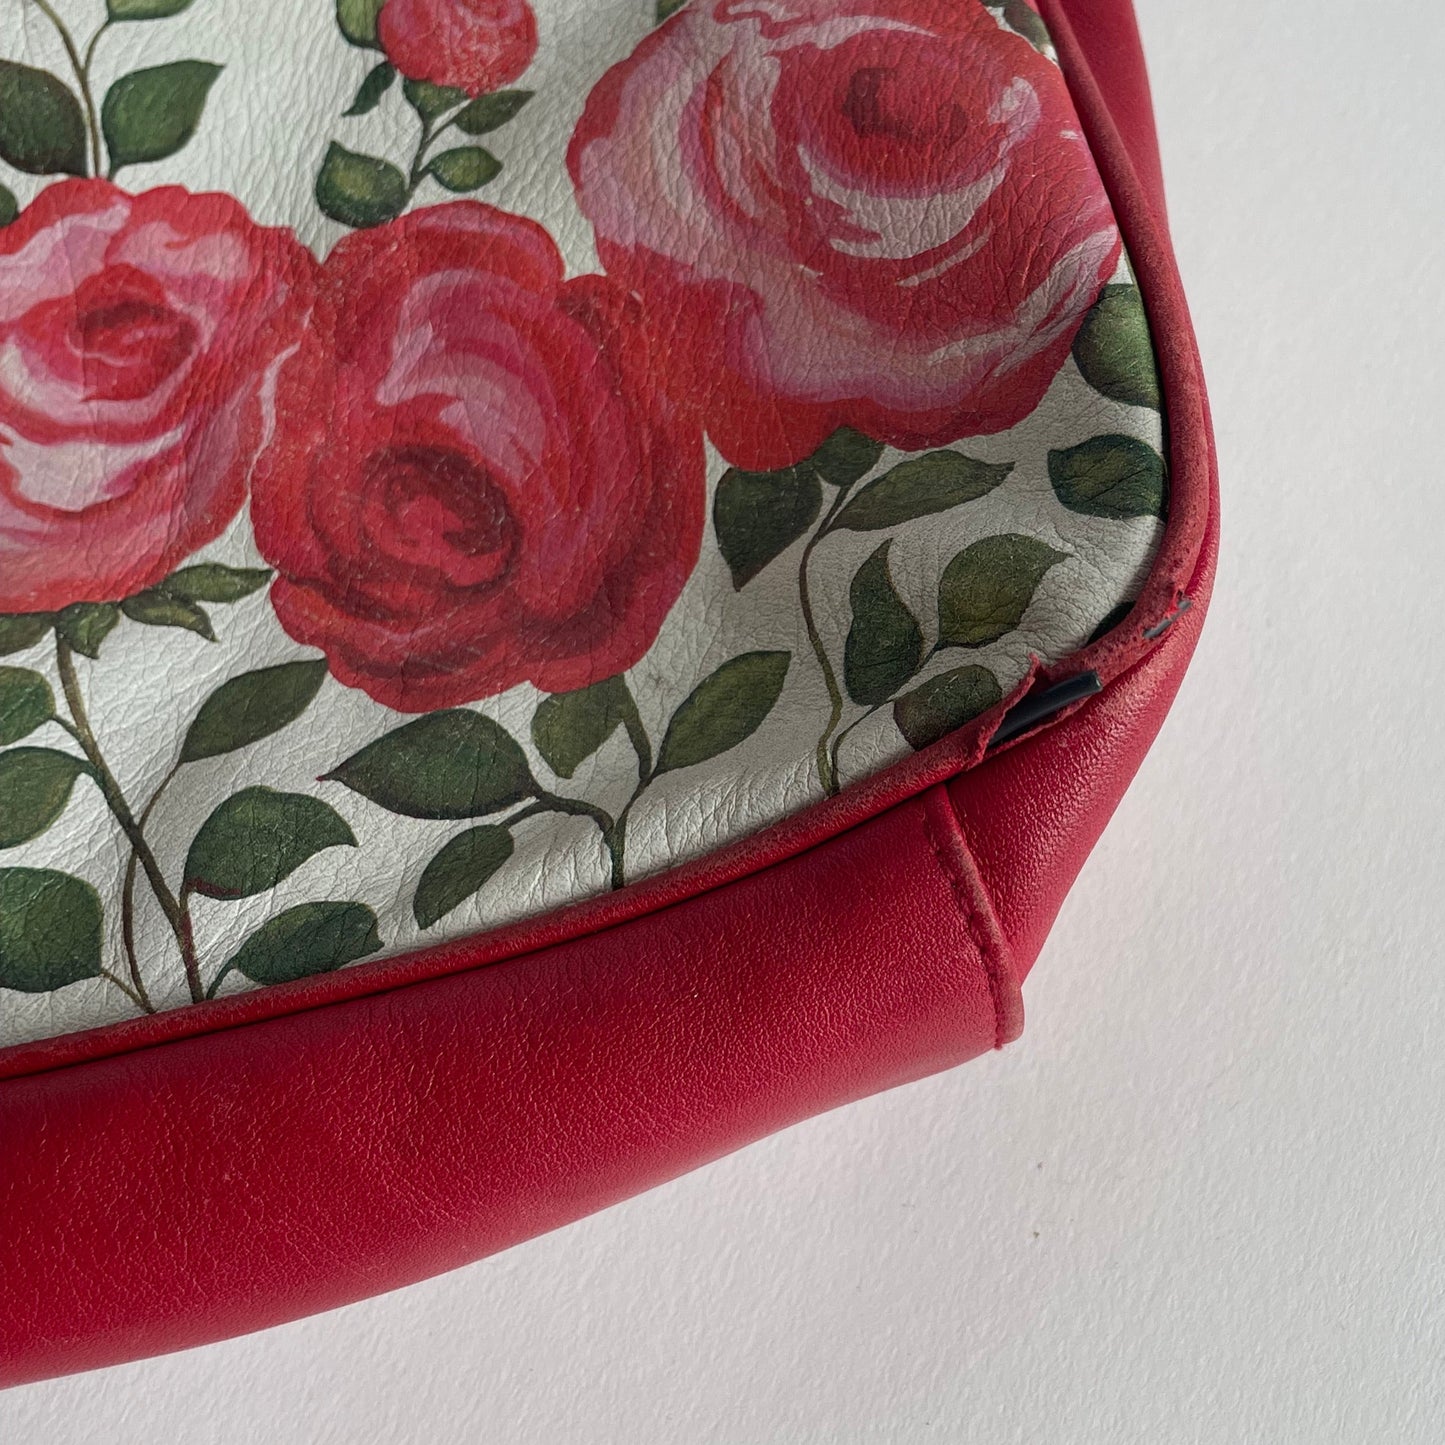 isabella fiore rose purse